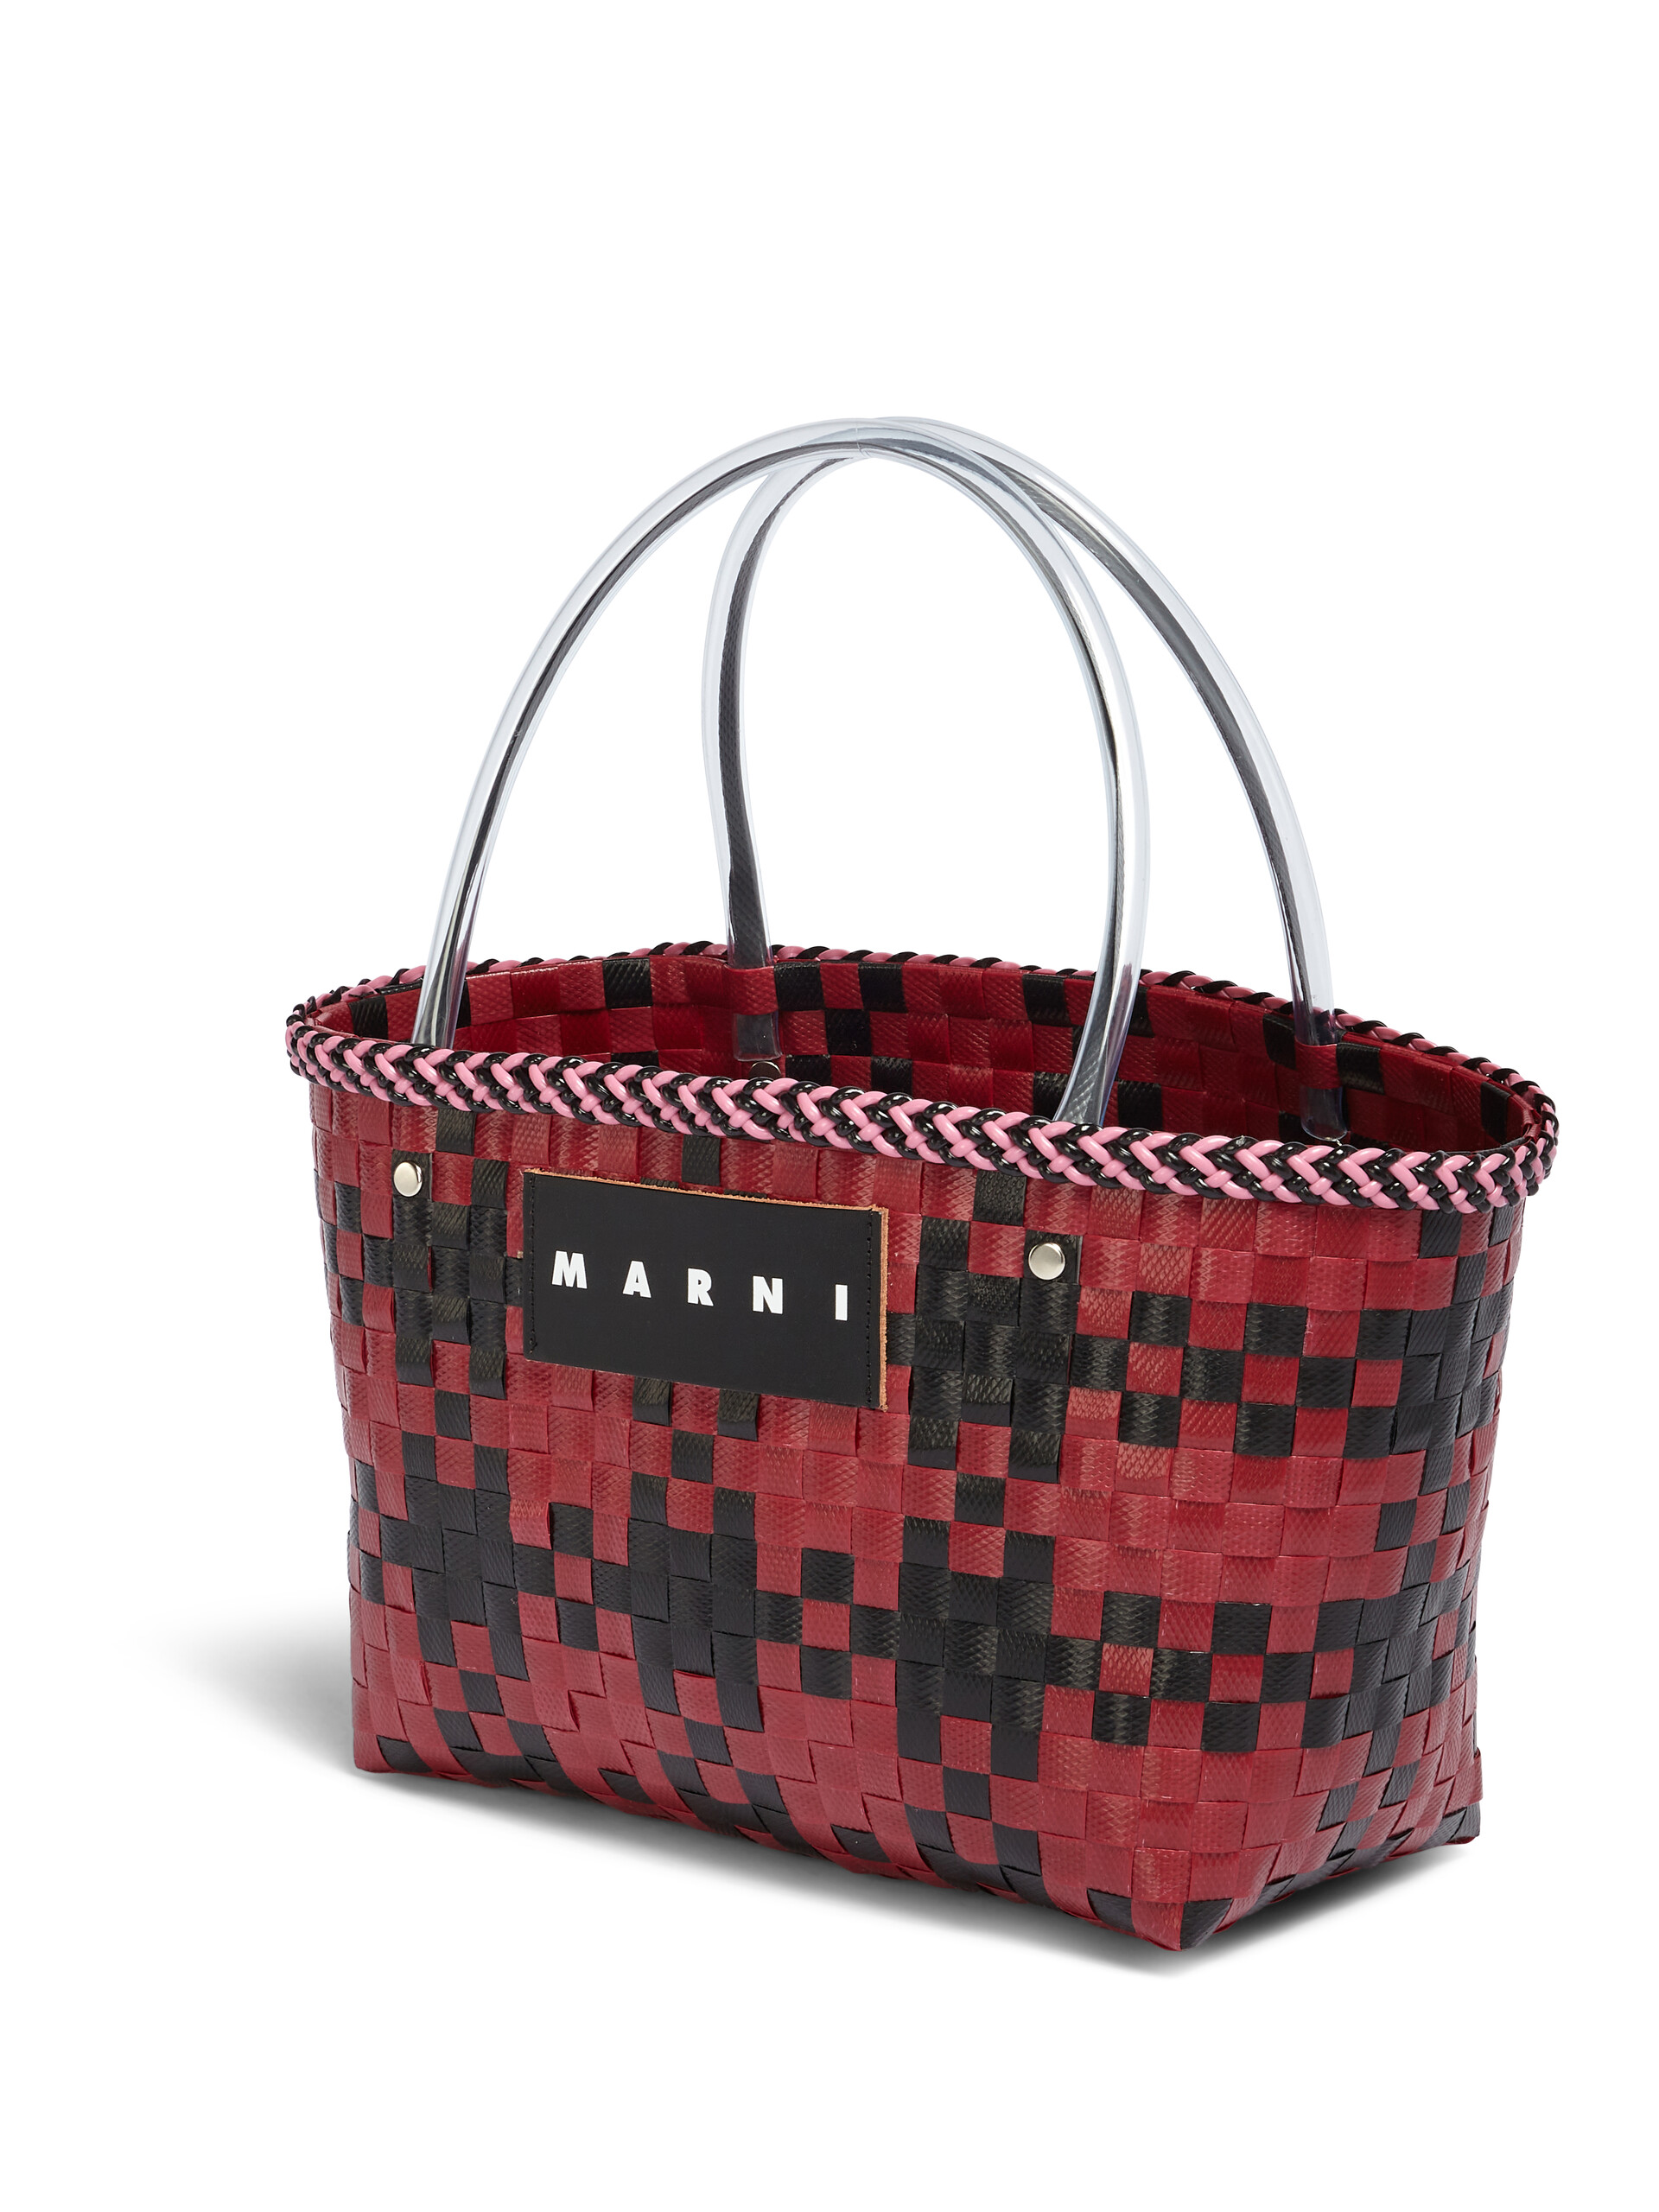 MARNI MARKET CHECK BAG in burgundy tartan woven material - Shopping Bags - Image 4